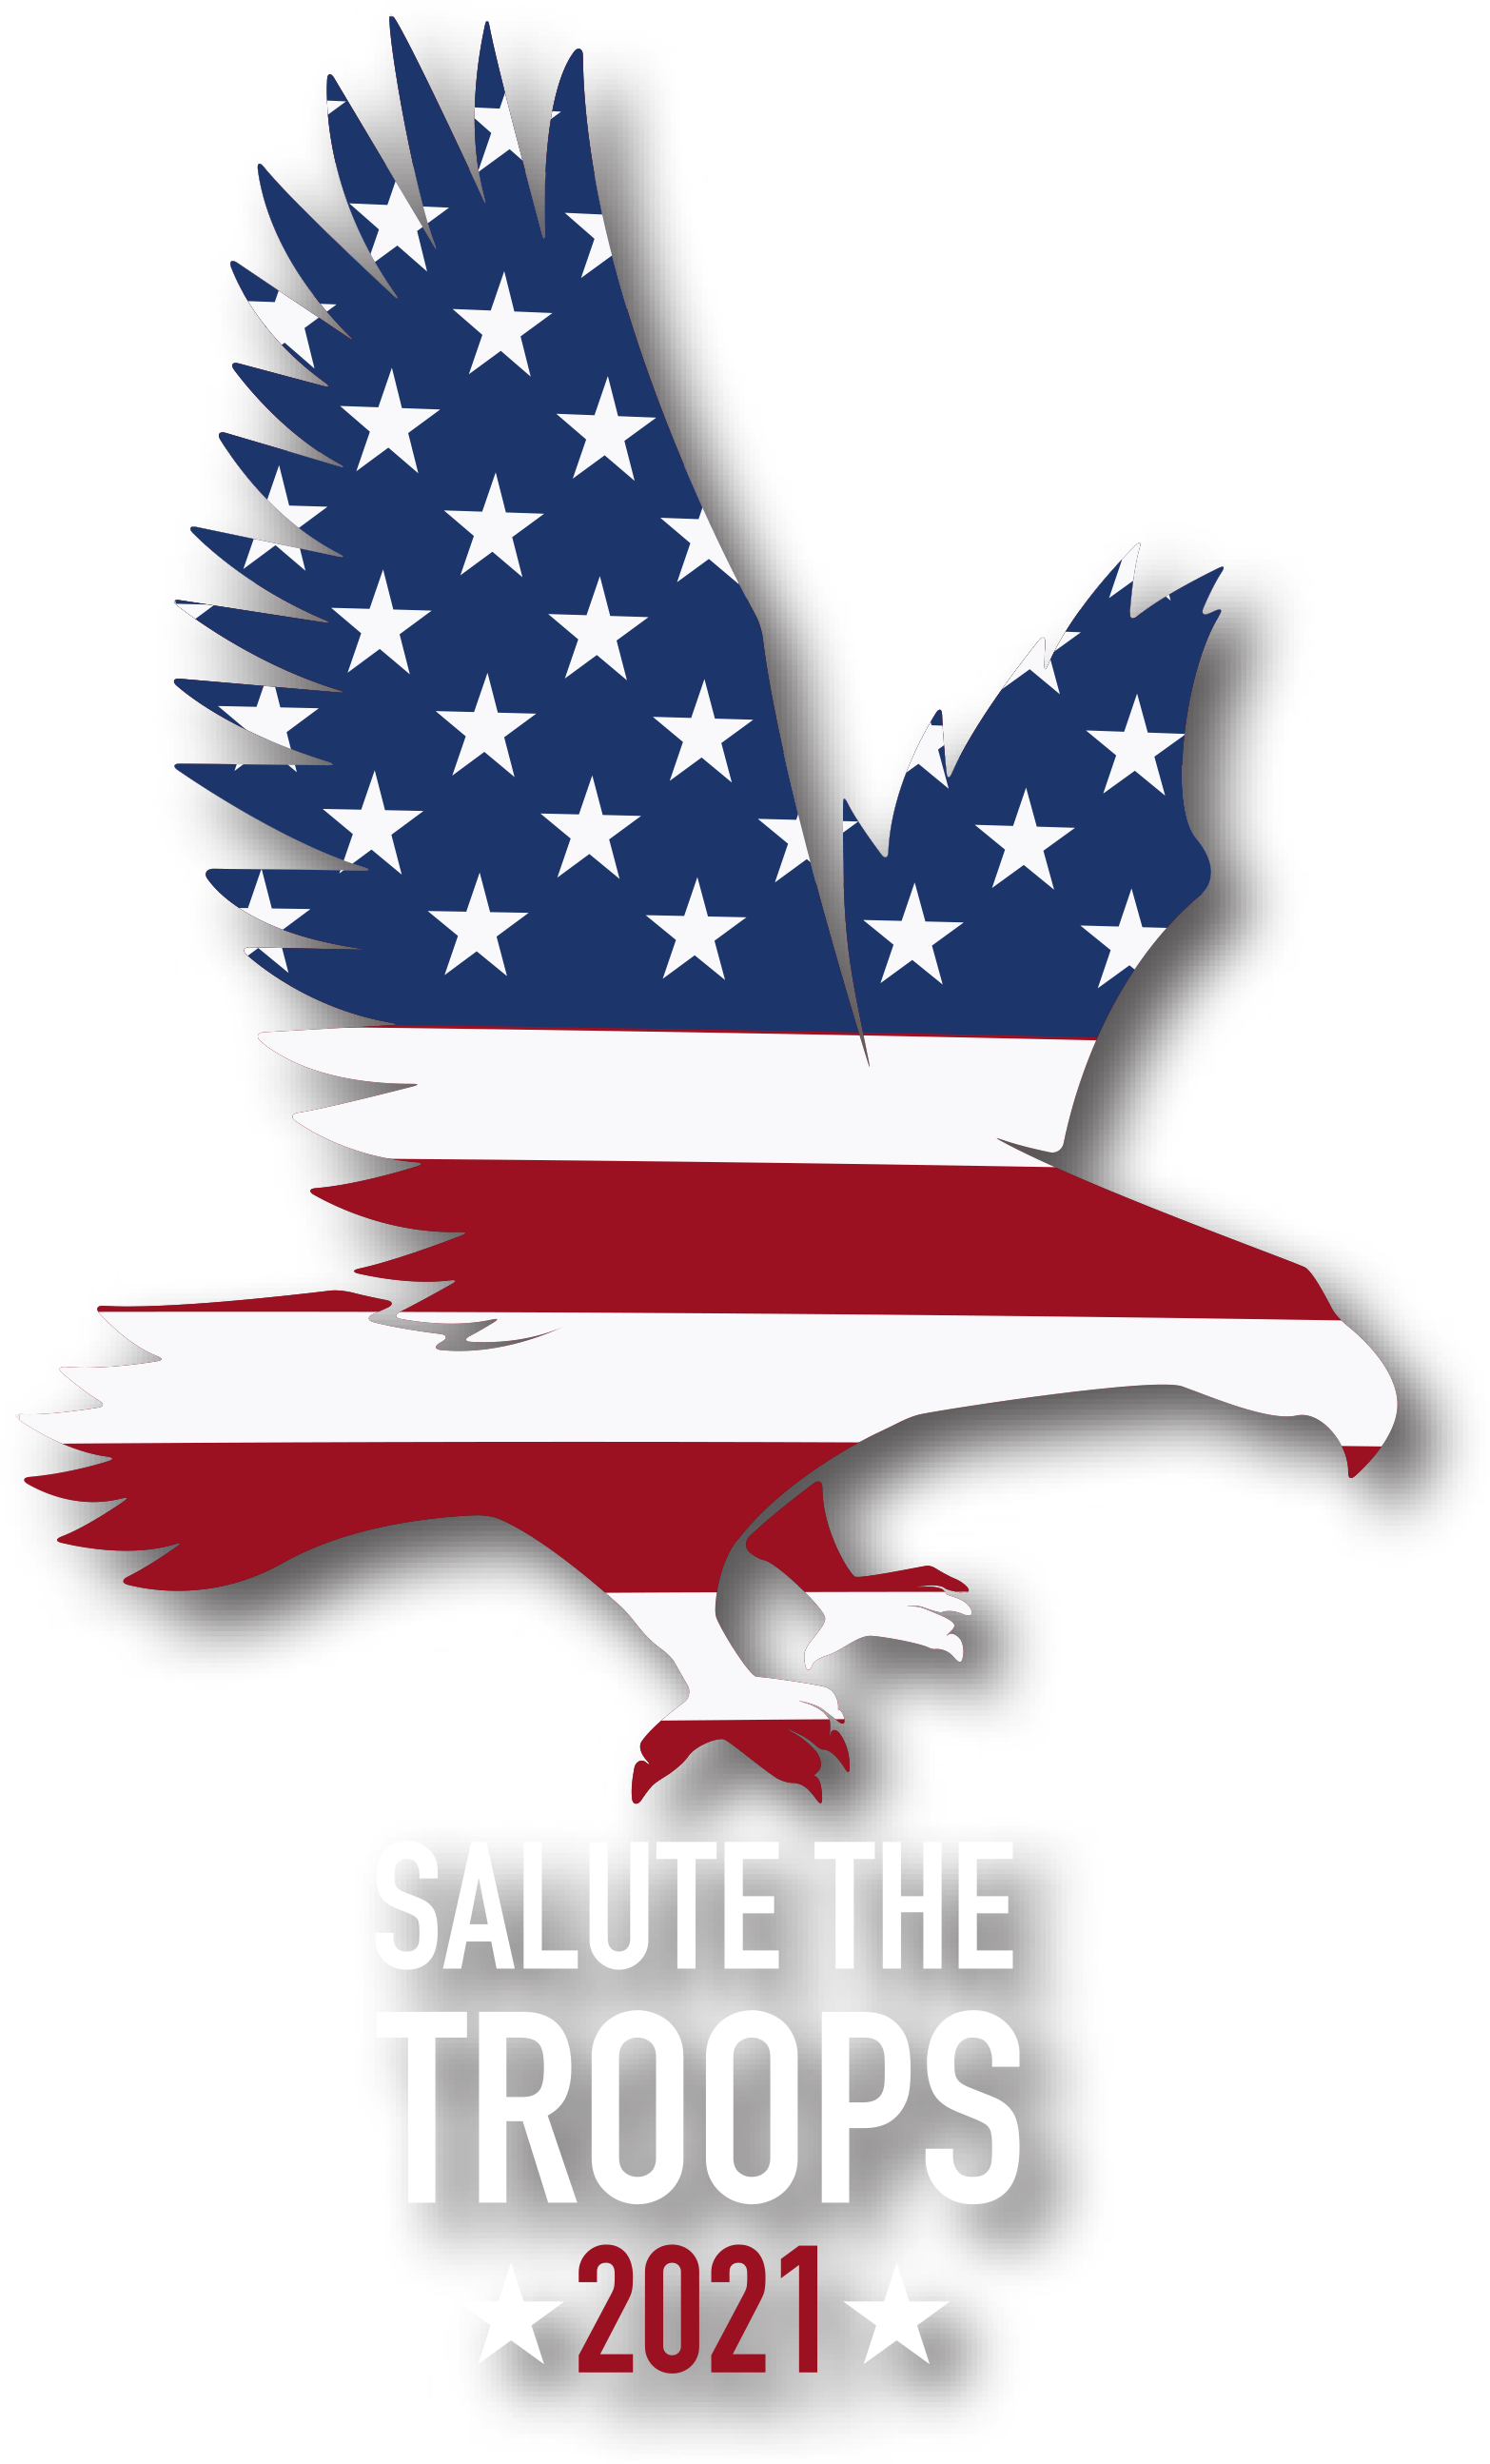 Salute the Troops 2021 eagle logo